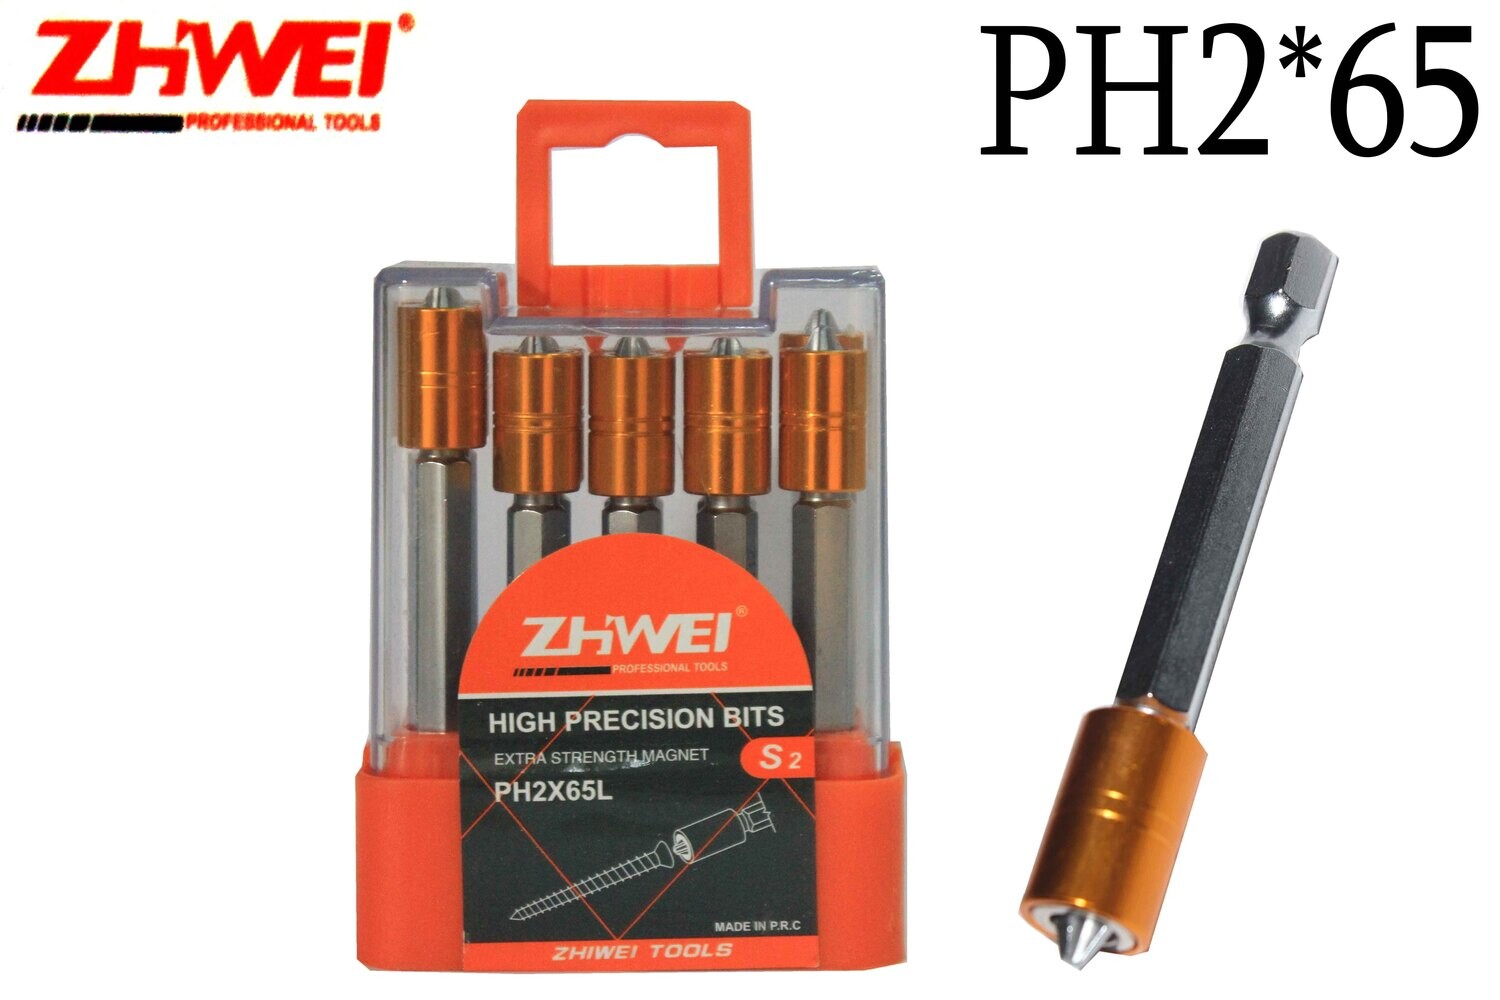 ZHWEI Պտուտակահանի փոխովի գլխիկ PH2*65 մագնիսով (ZW-G1701)